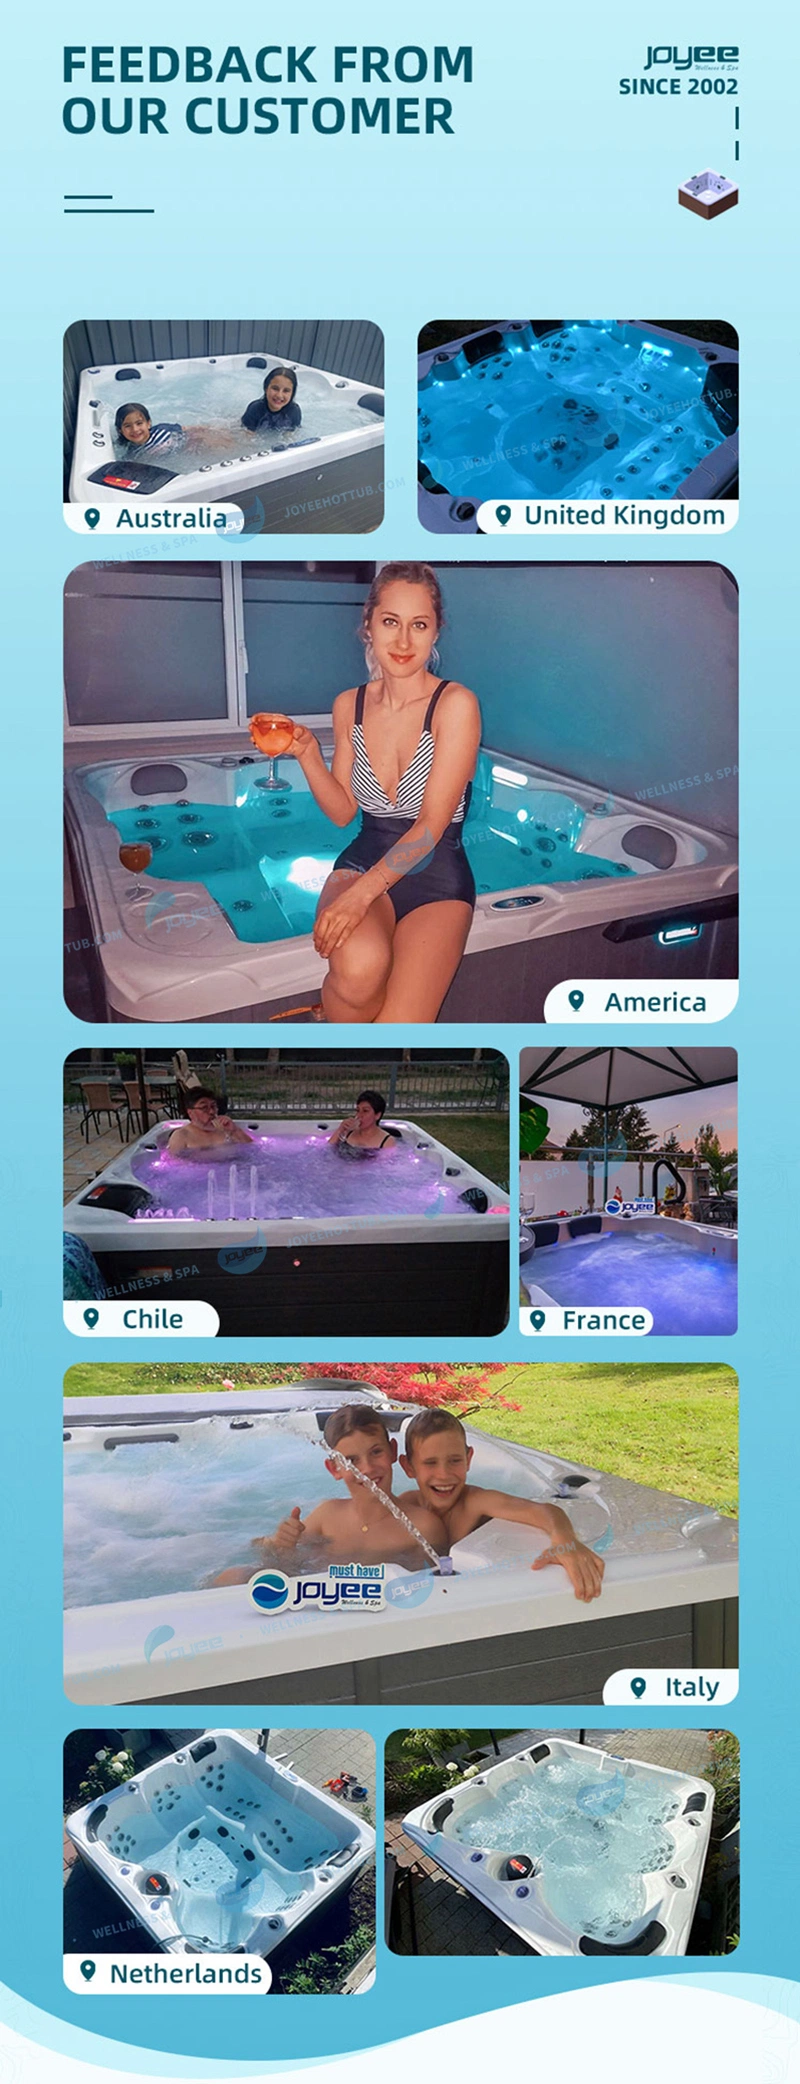 Joyee 5 Seats Acrylic Pool Balboa Hot Tub Outdoor Whirlpool SPA Bath